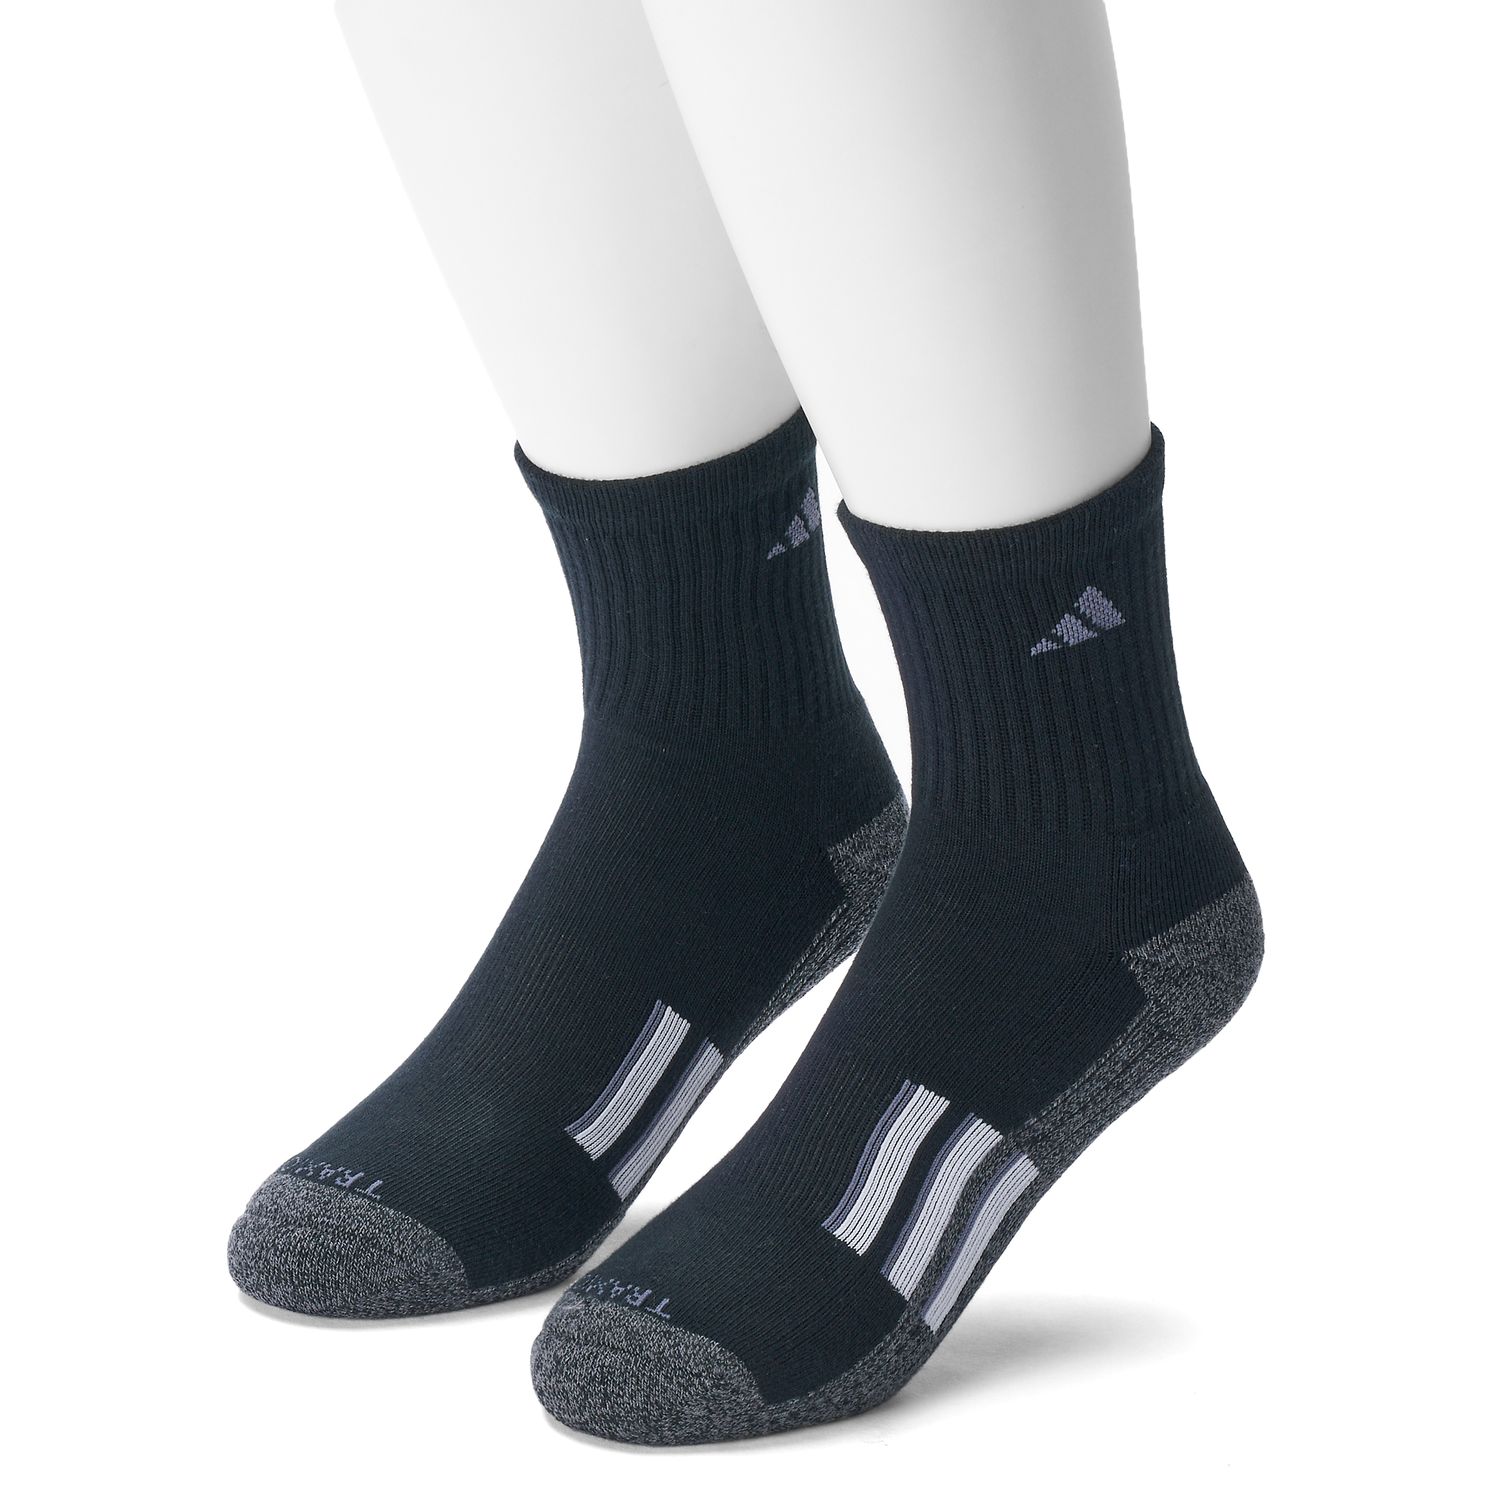 adidas climacool vs climalite socks